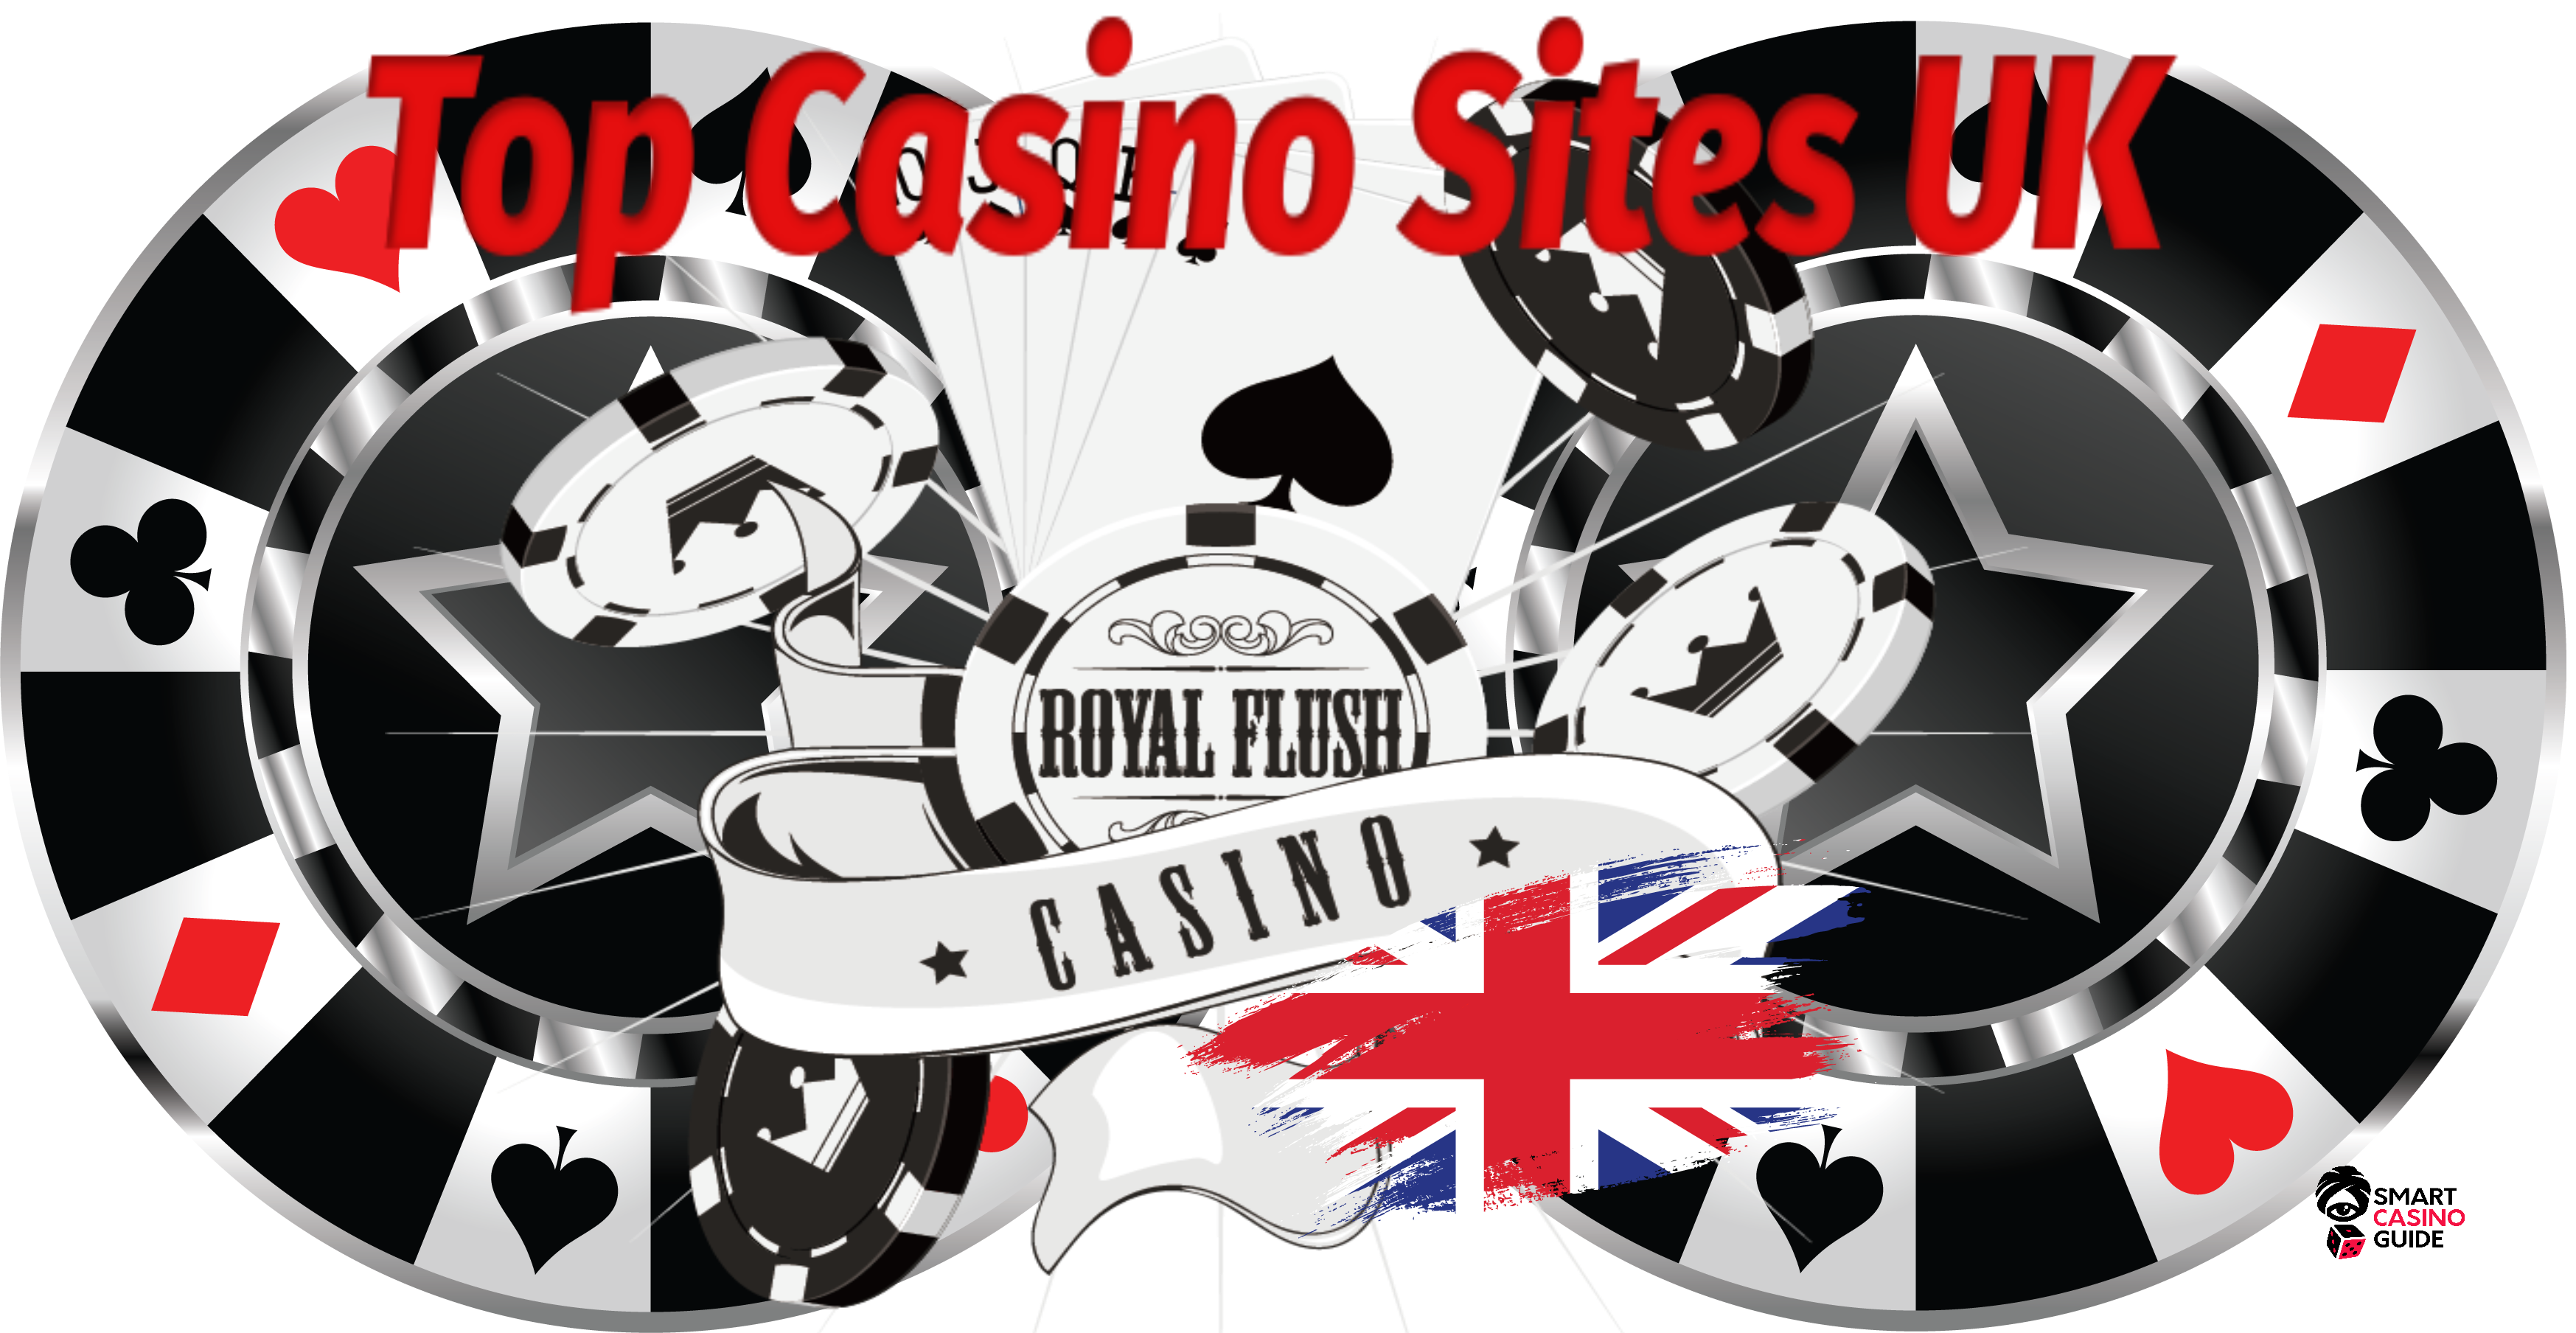 Casino Websites Uk